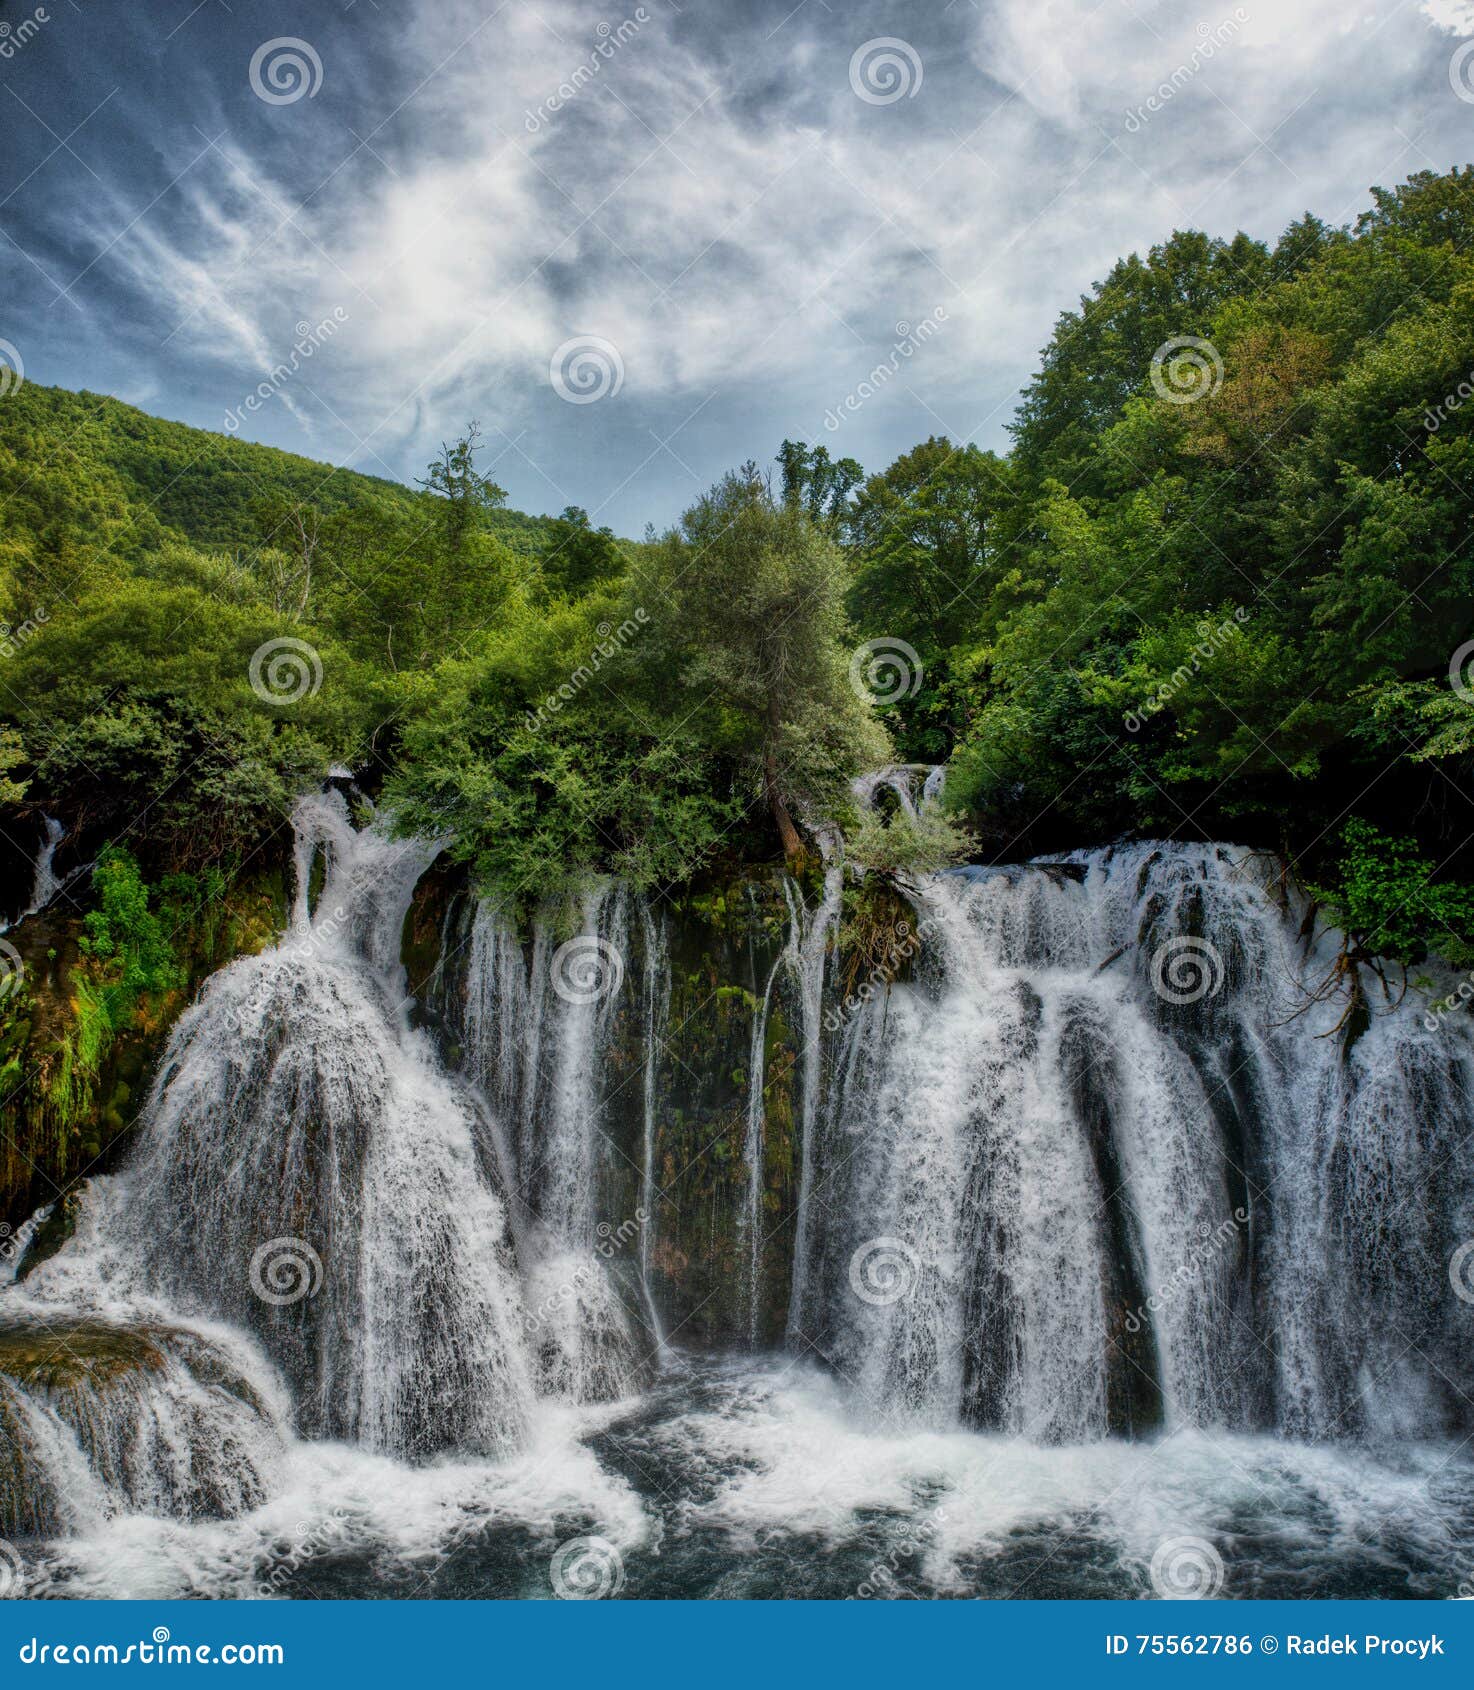 plitvice lakes national park waterfall, plitvica, croatia